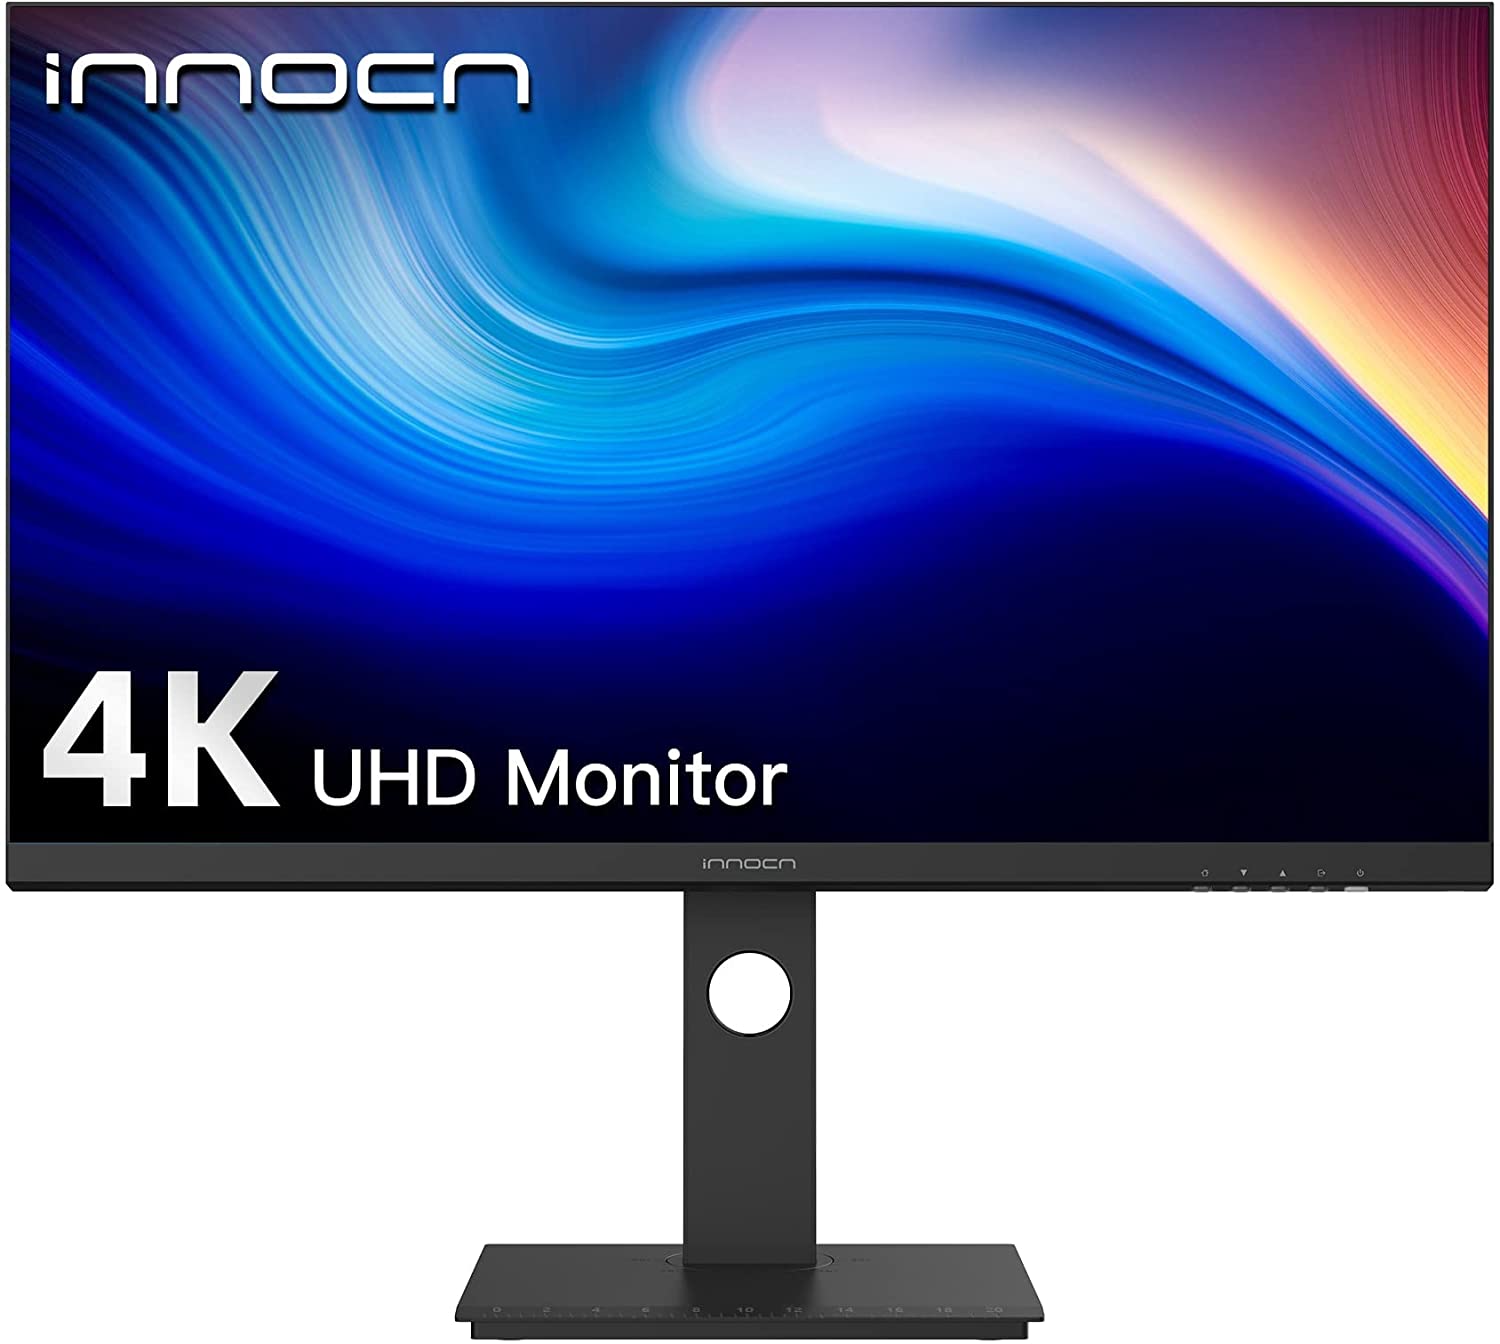 Eizo lanza un monitor 4K UHD de 27 pulgadas con calibración por hardware